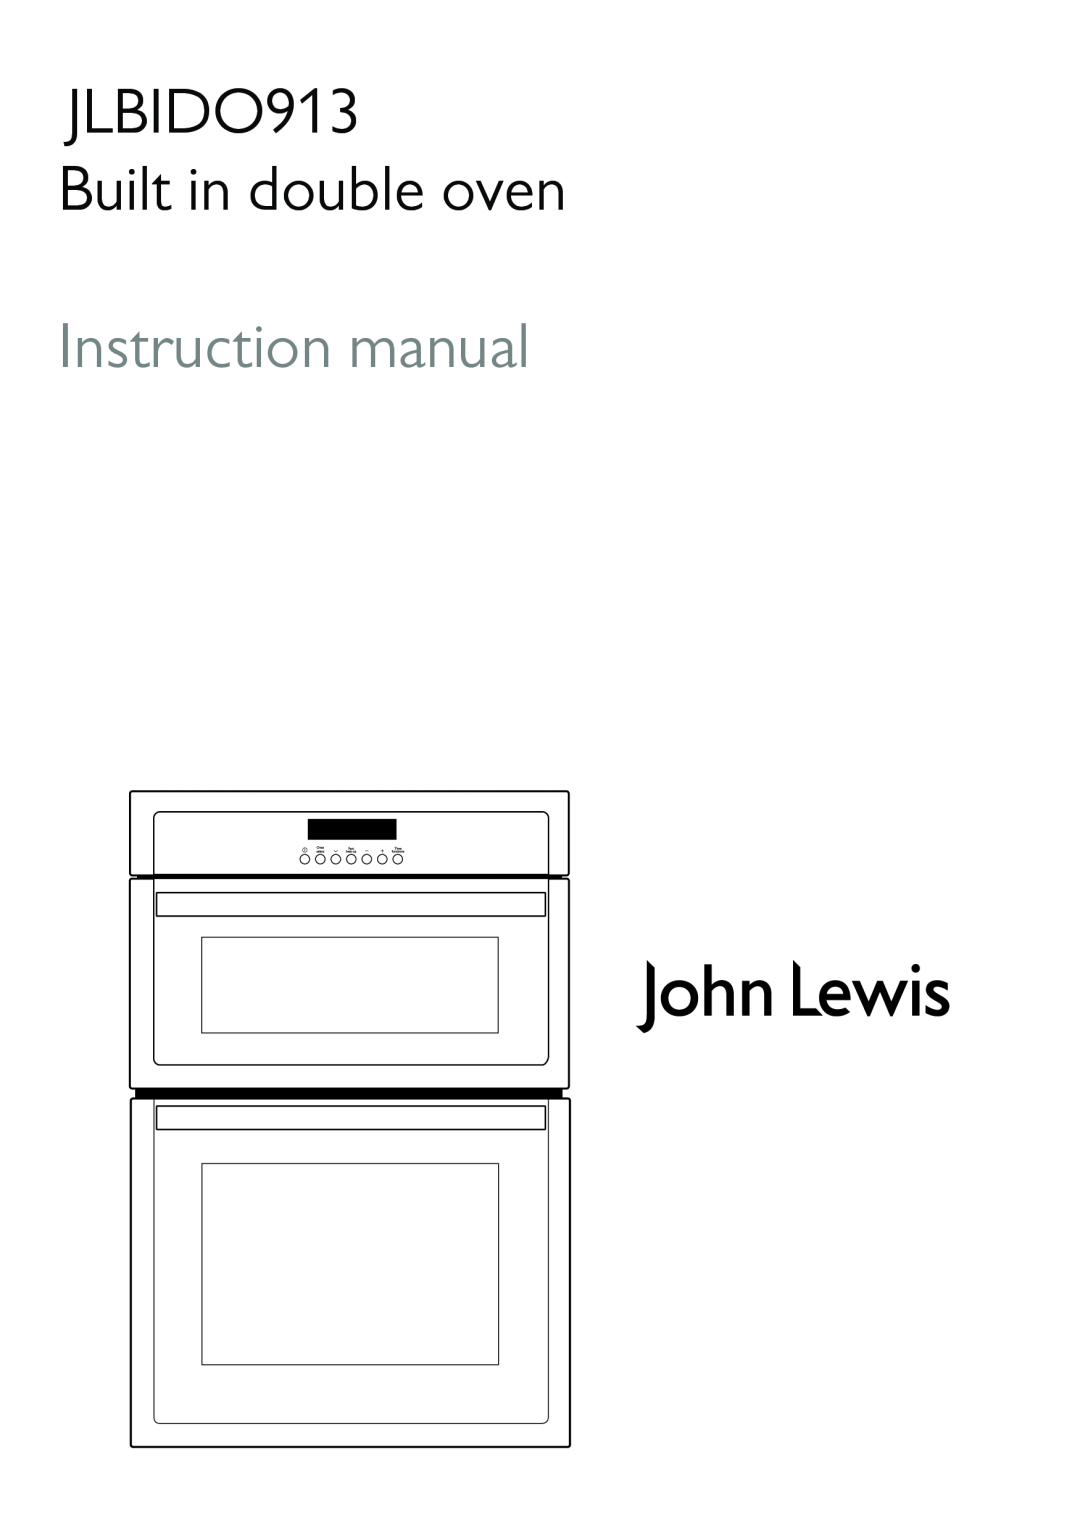 John Lewis instruction manual JLBIDO913 Built in double oven 